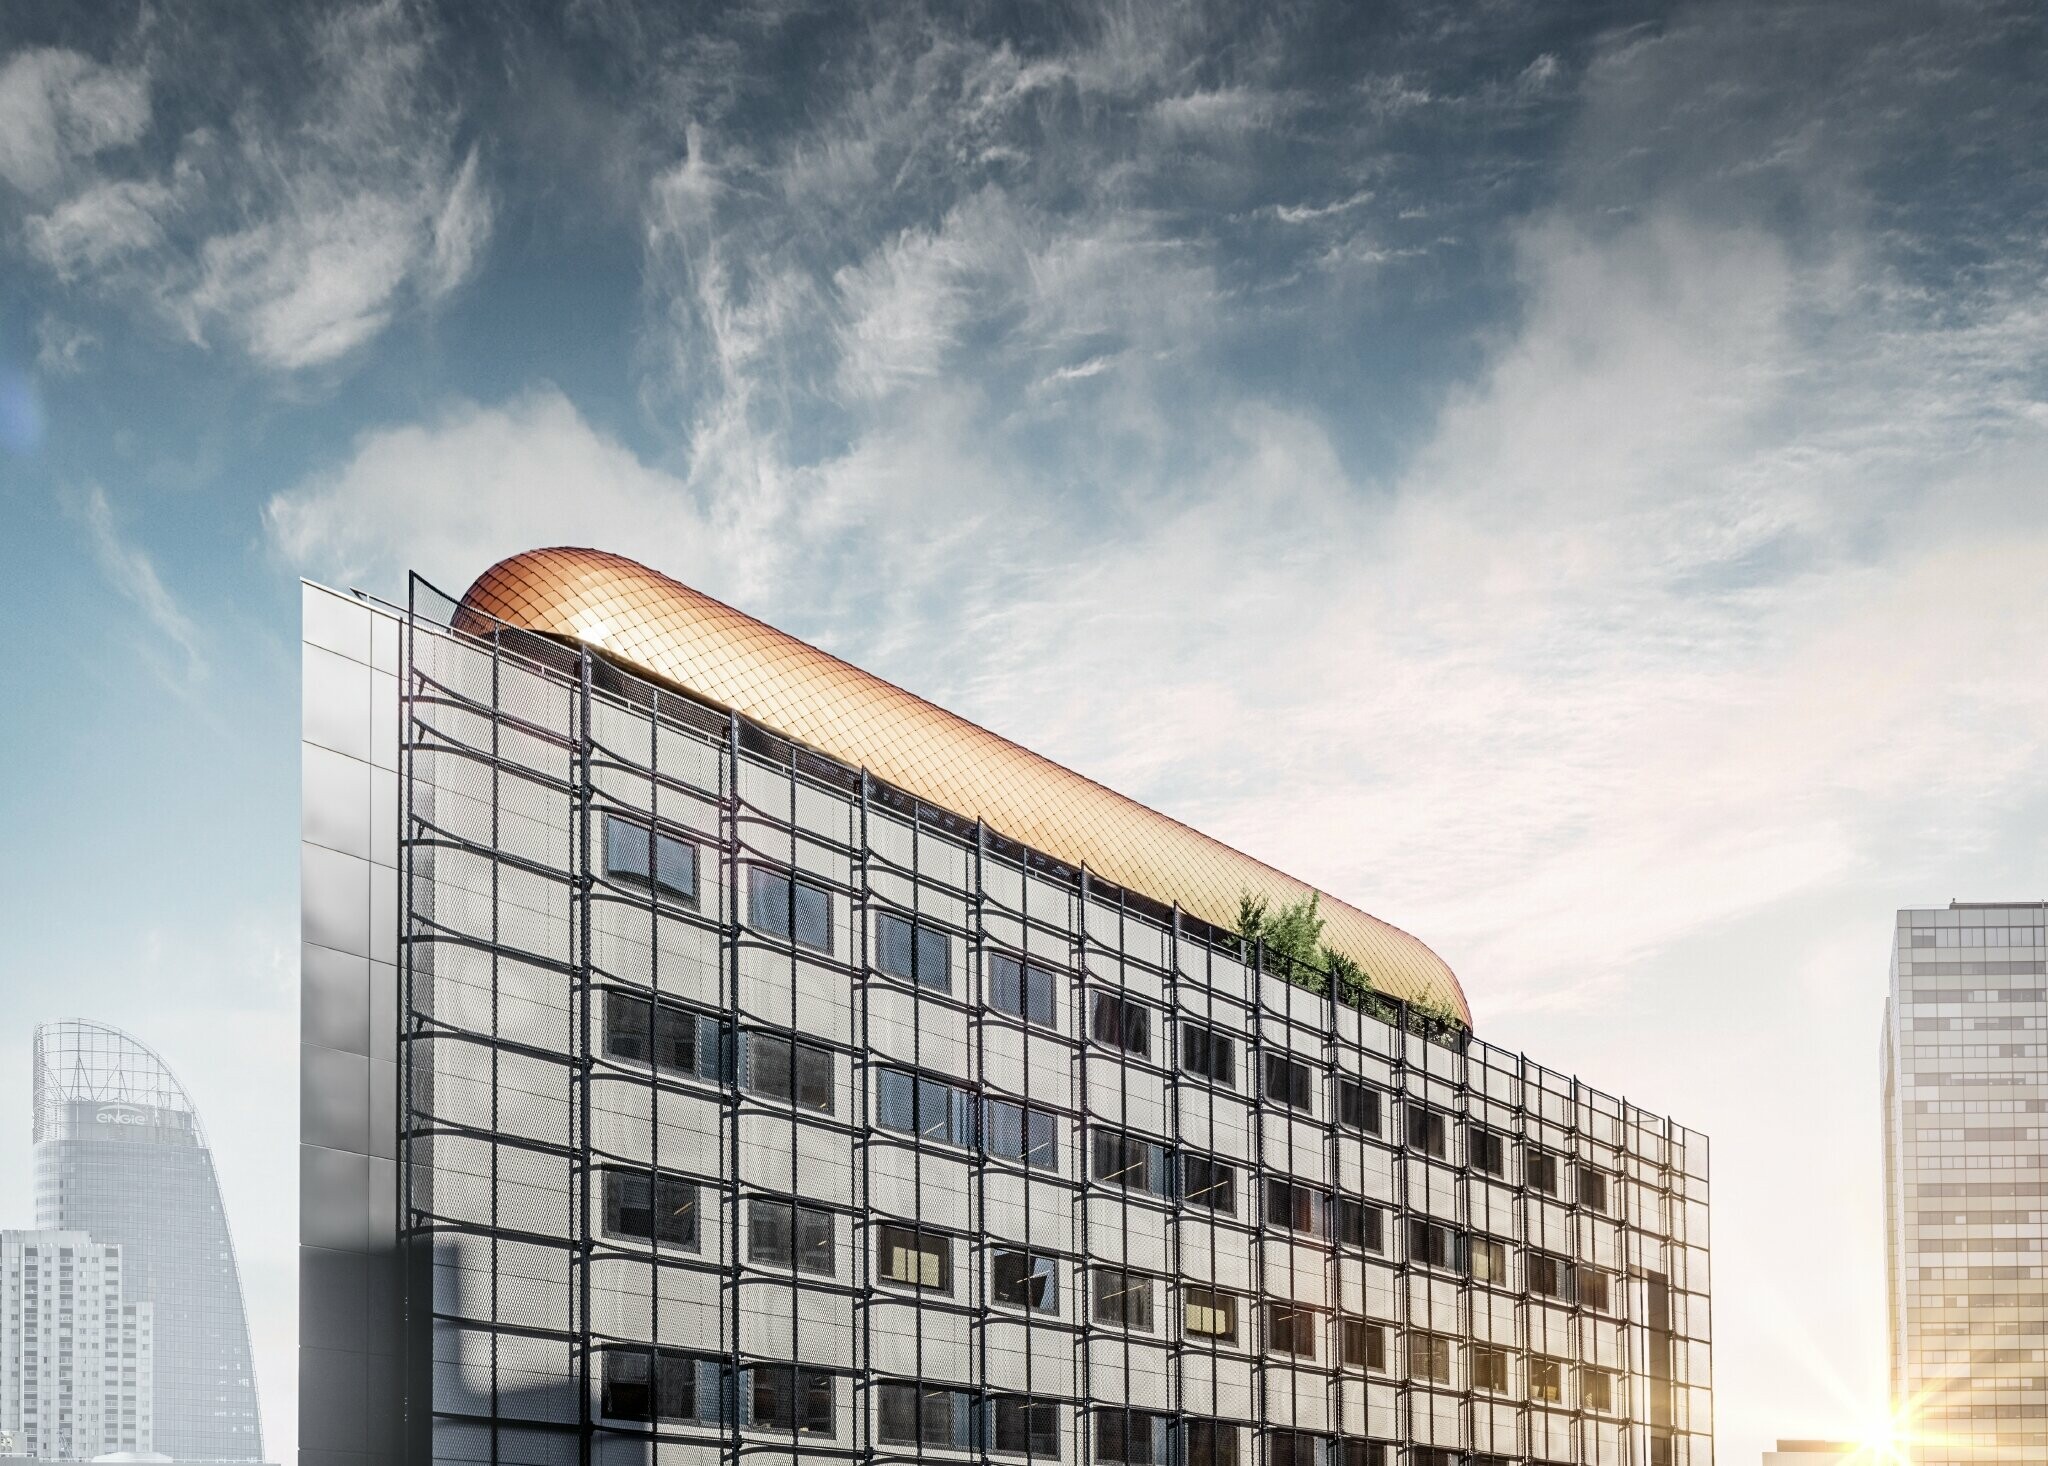 Uredska zgrada Blackpearl u Parizu s novom nadgradnjom obloženom PREFA krovnim rombom 29 × 29 u bakrenoj boji